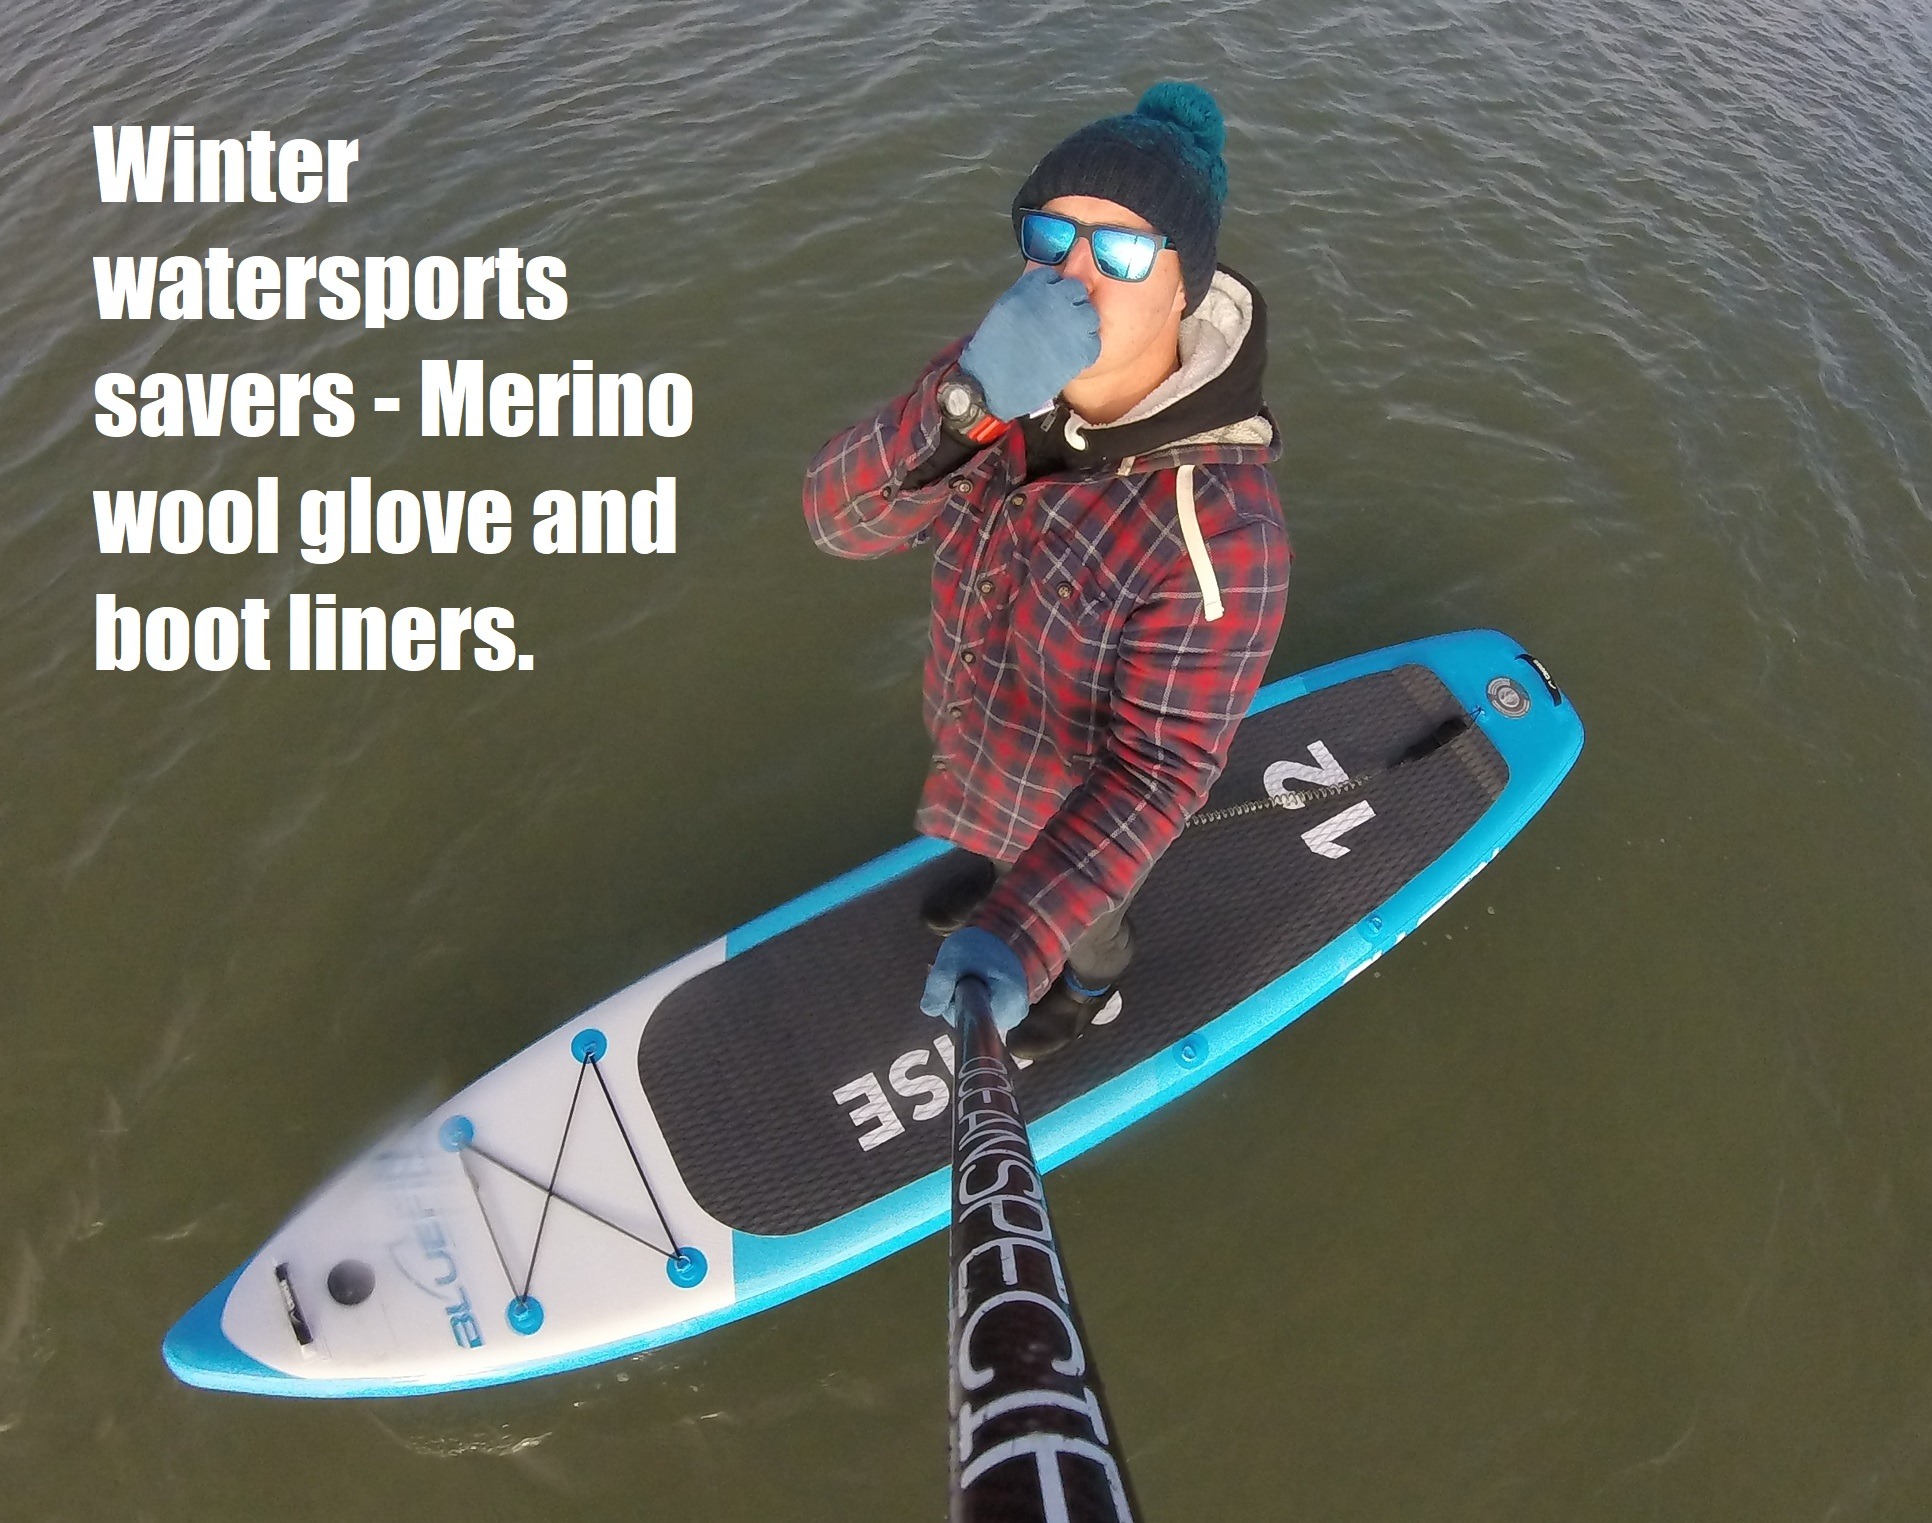 Winter watersports savers - Merino wool glove and boot liners.